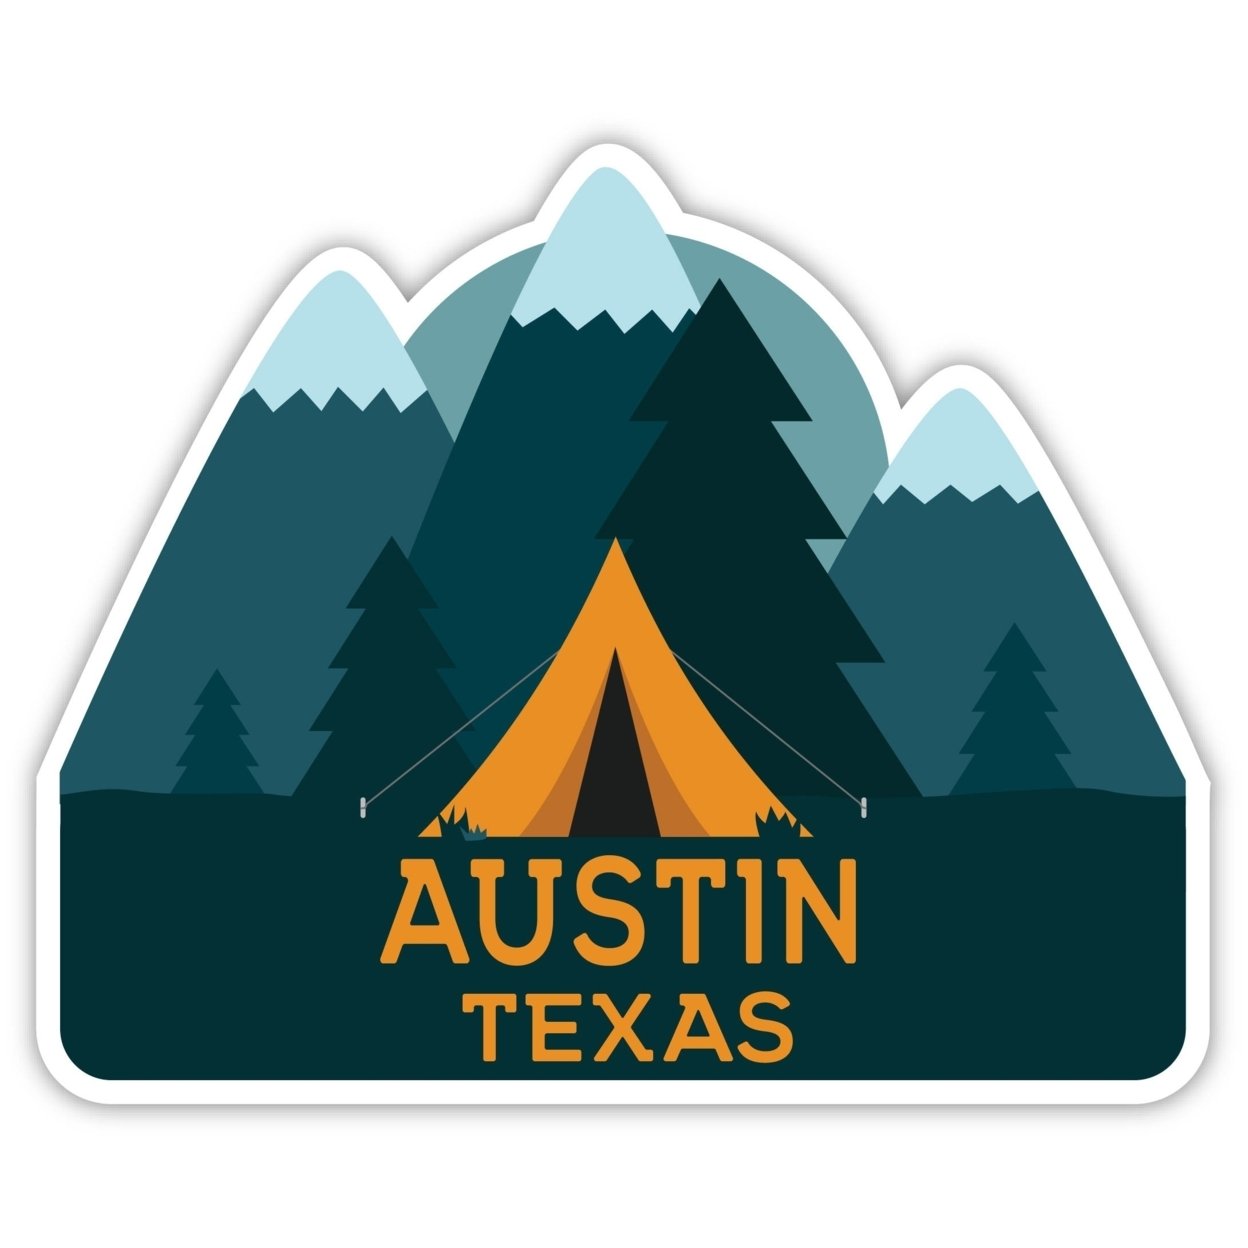 Austin Texas Souvenir Decorative Stickers (Choose Theme And Size) - 4-Pack, 4-Inch, Tent